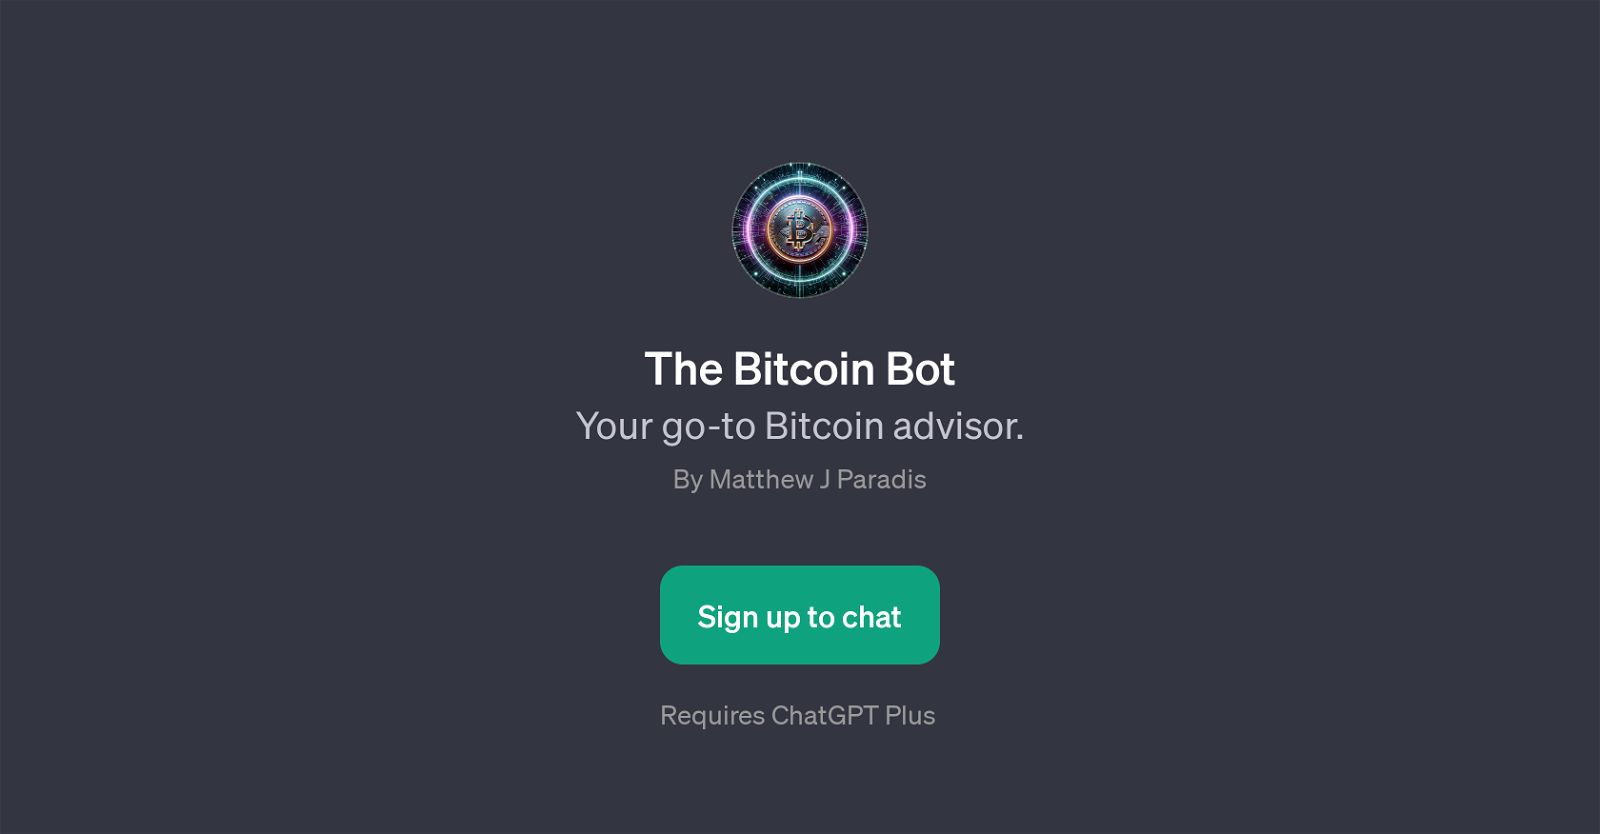 The Bitcoin Bot website